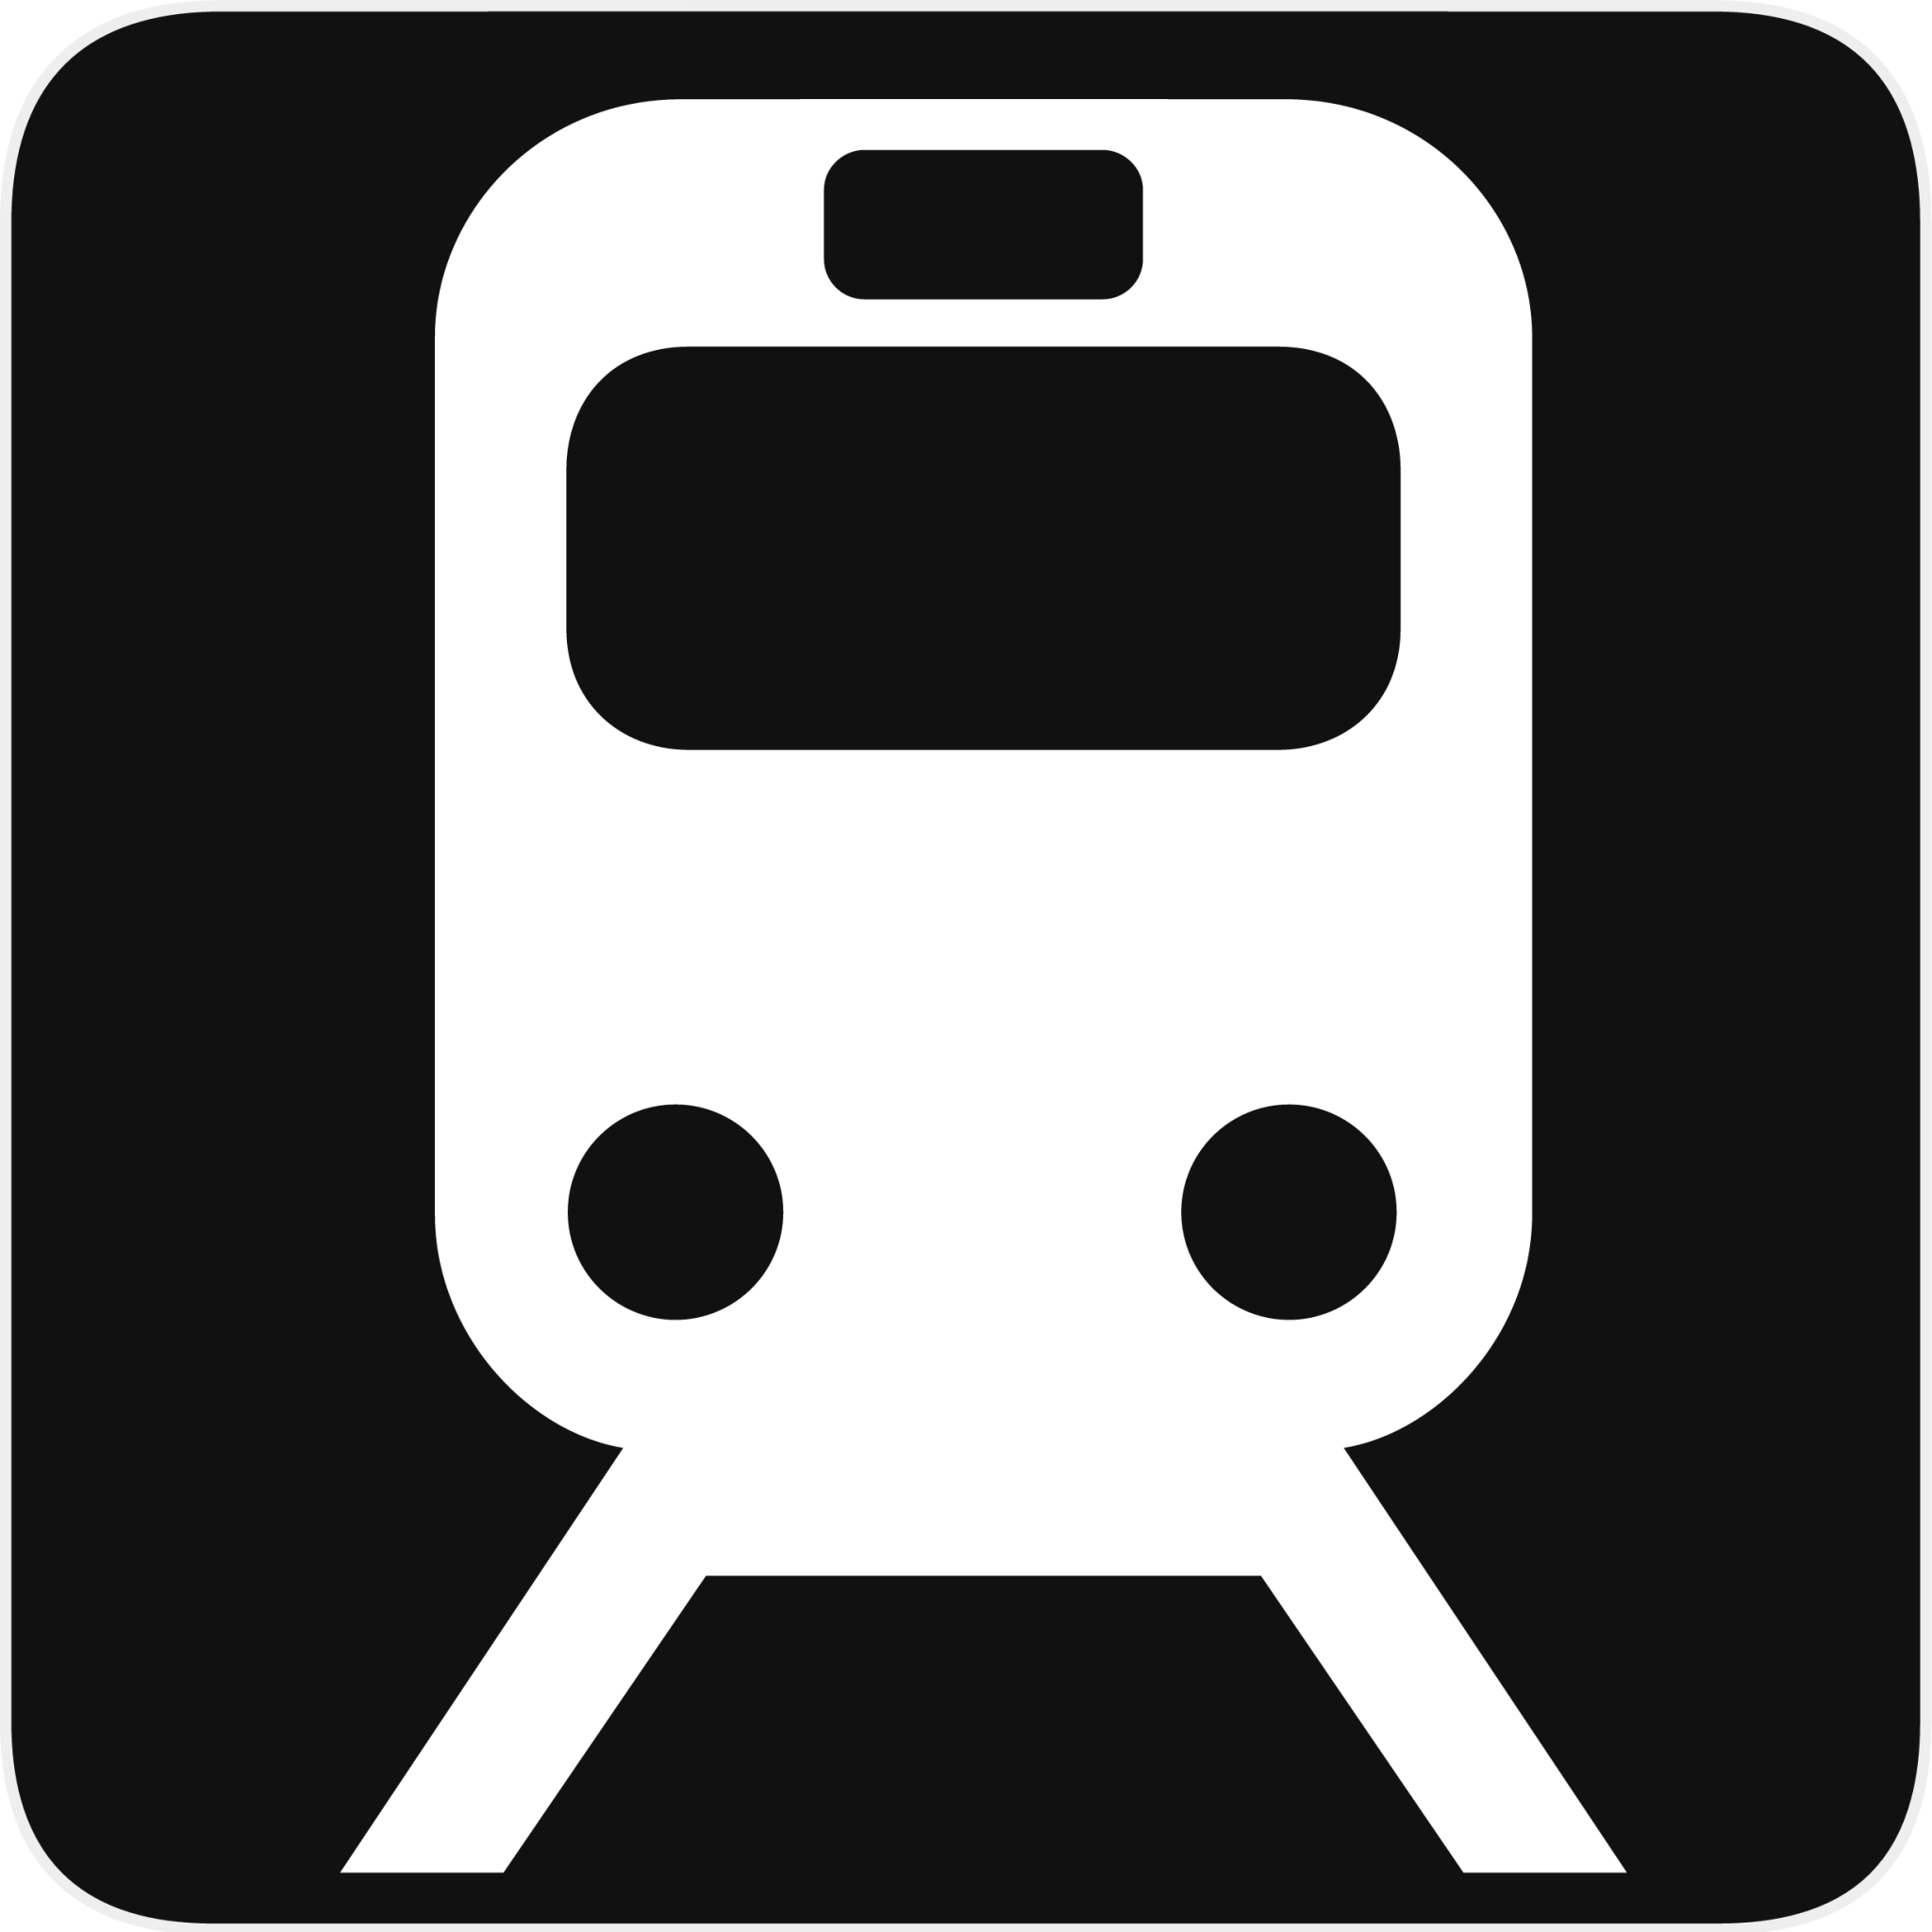 train station2 icon